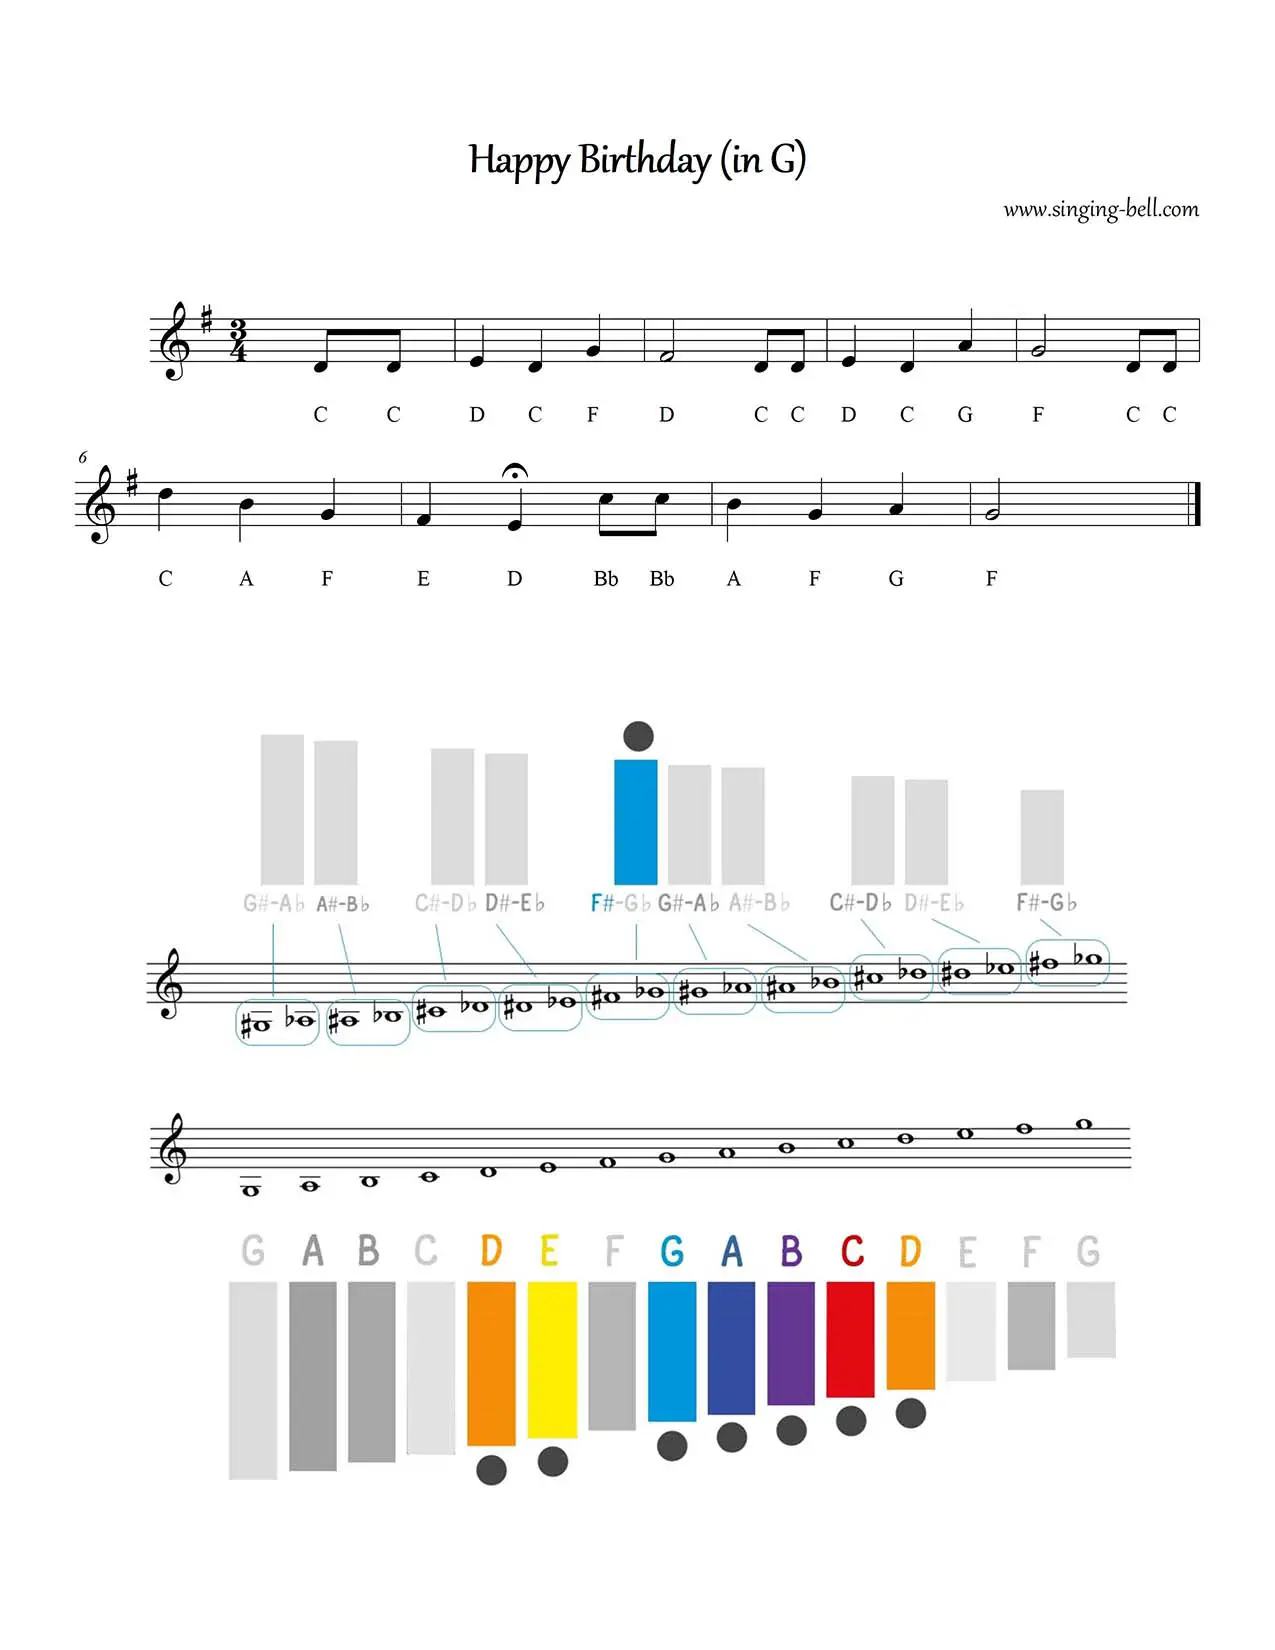 Happy Birthday free xylophone glockenspiel sheet music notes chart pdf in G